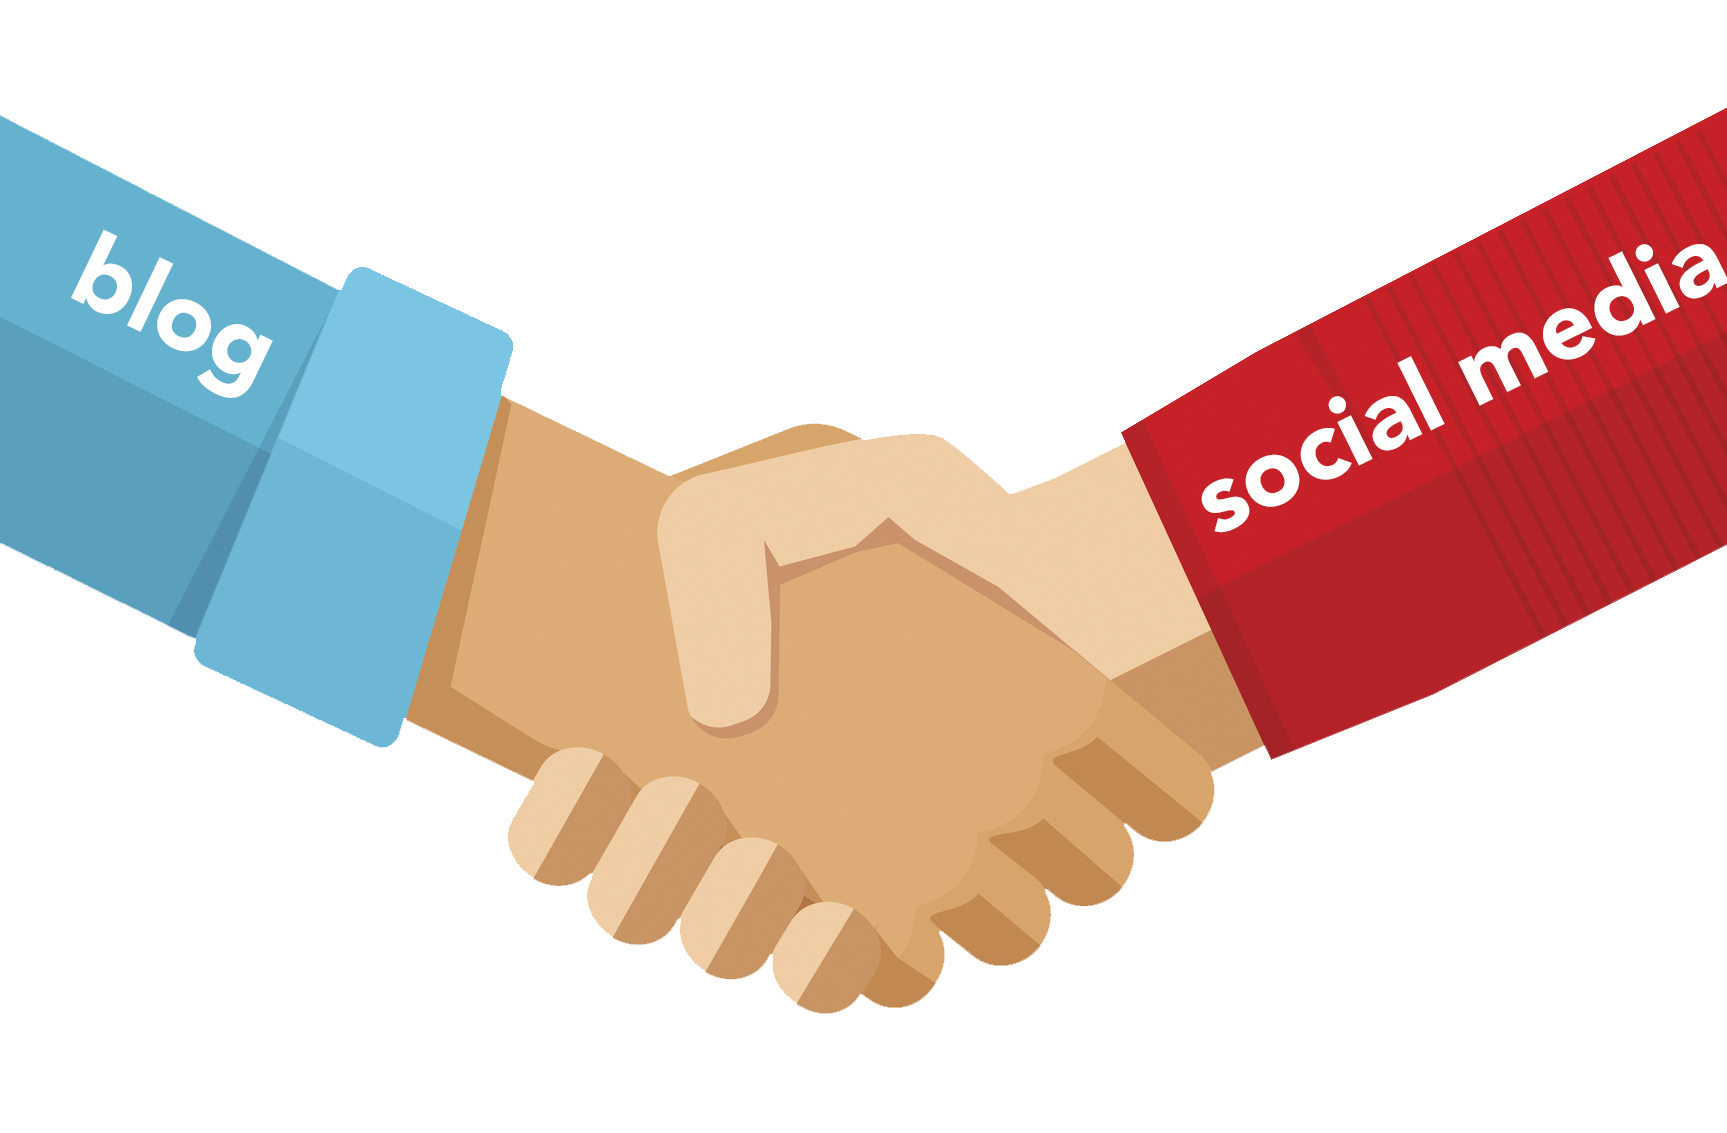 blog and social media handshake